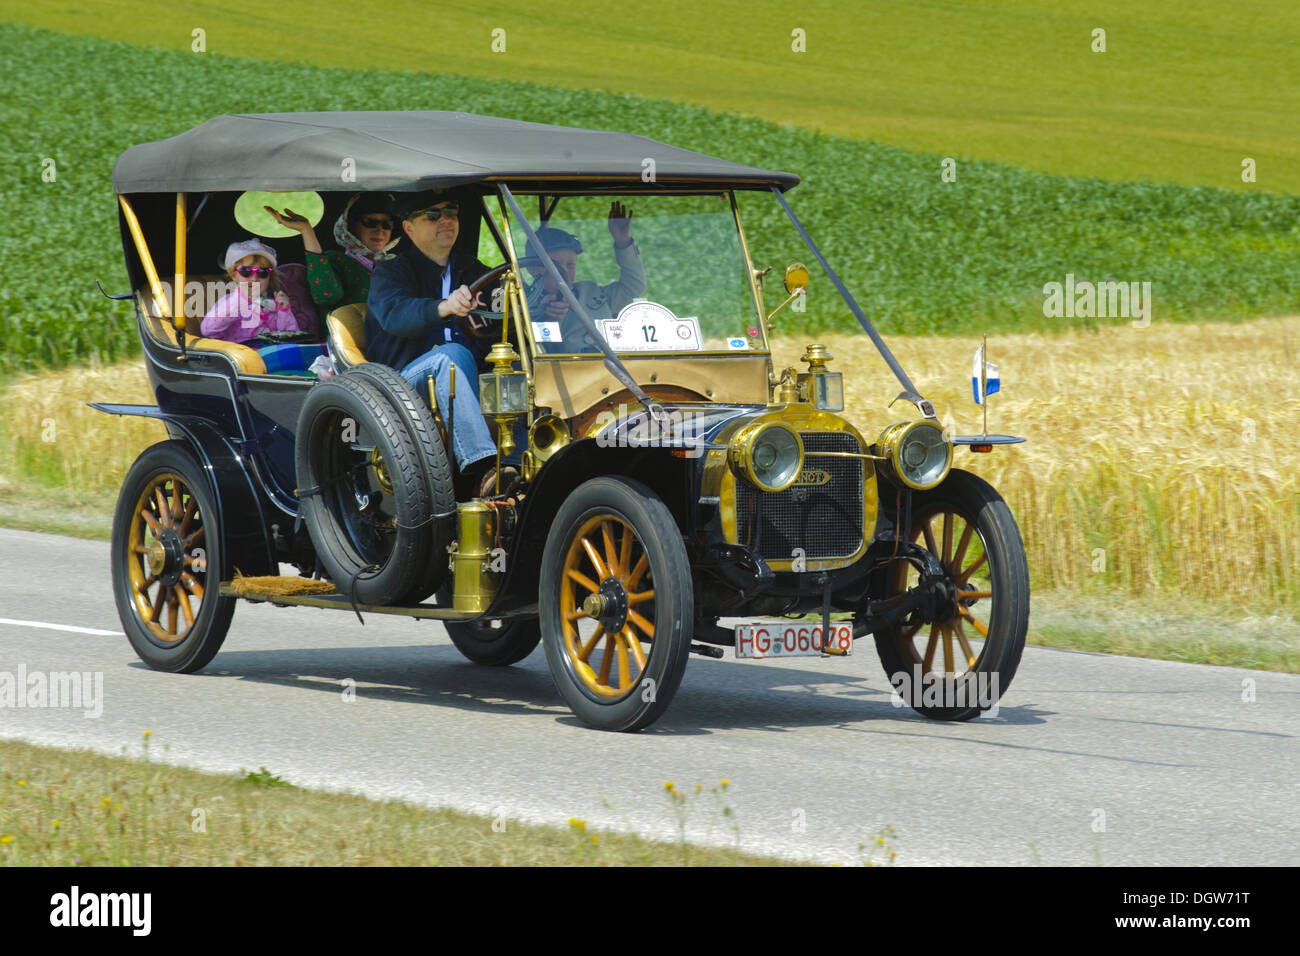 oldtimer car Duhanot CG Bolide Stock Photo